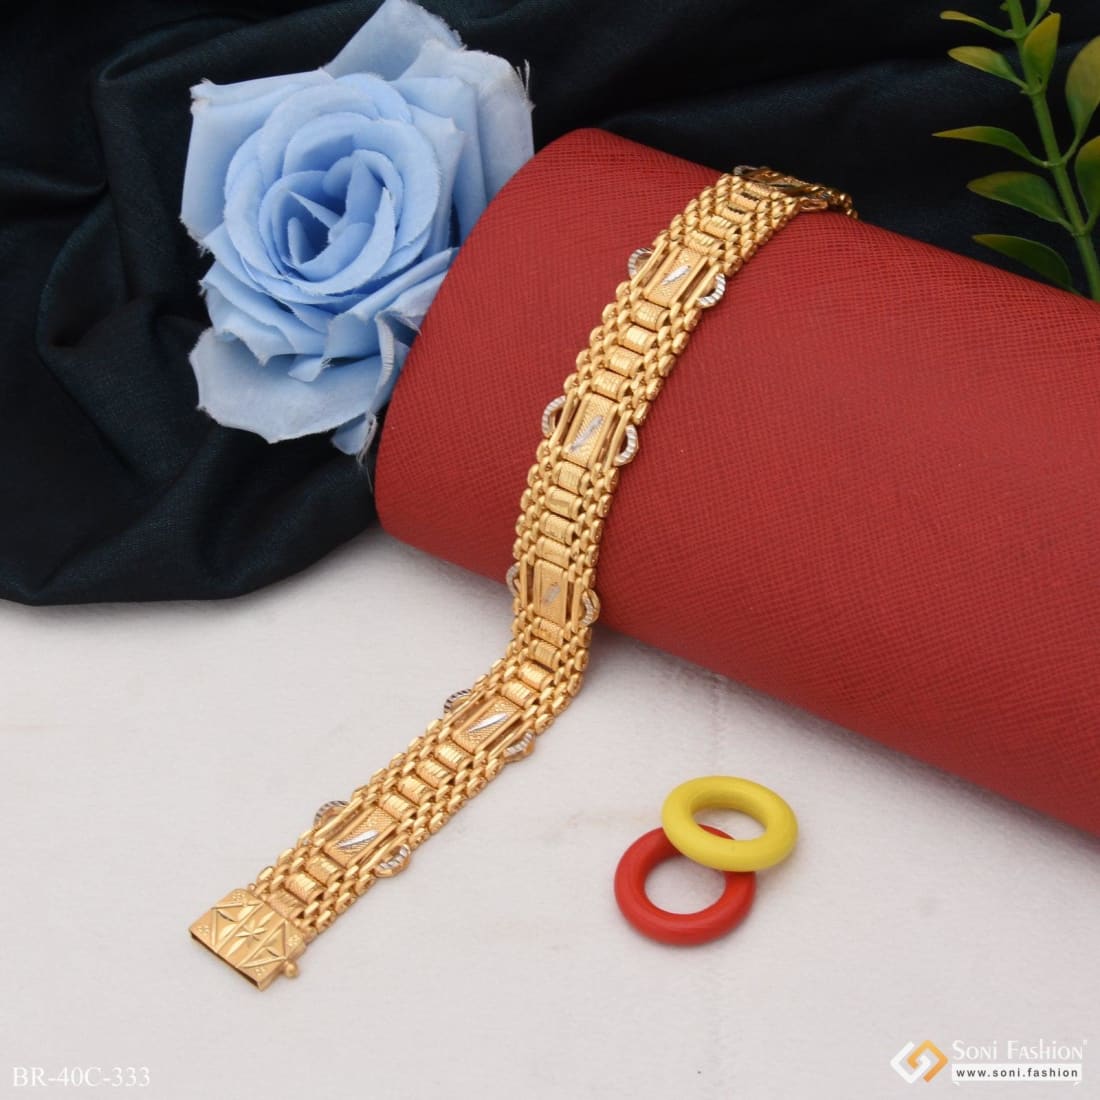 1 Gram Gold Forming Lovely Design High-quality Bracelet For Men - Style  C333 - Soni Fashion at Rs 4060.00, Rajkot | ID: 2849507603162